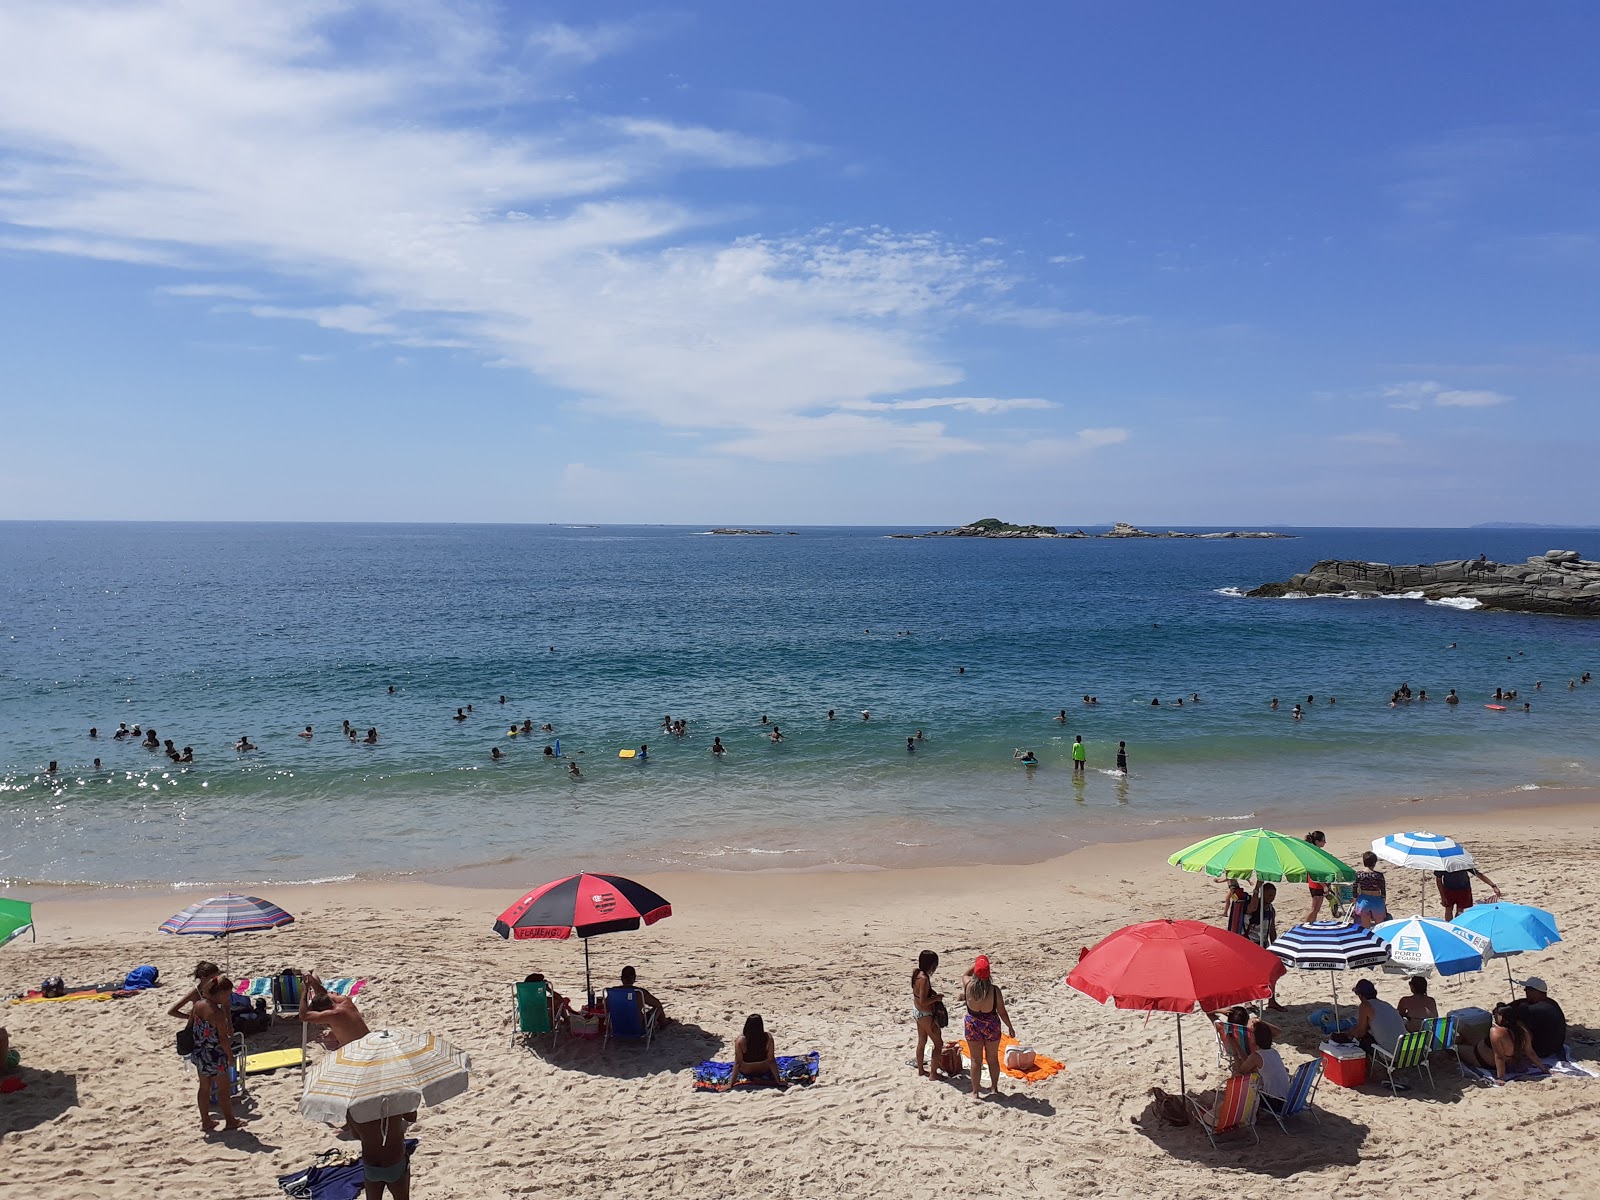 Photo of Costa Azul Beach with long straight shore